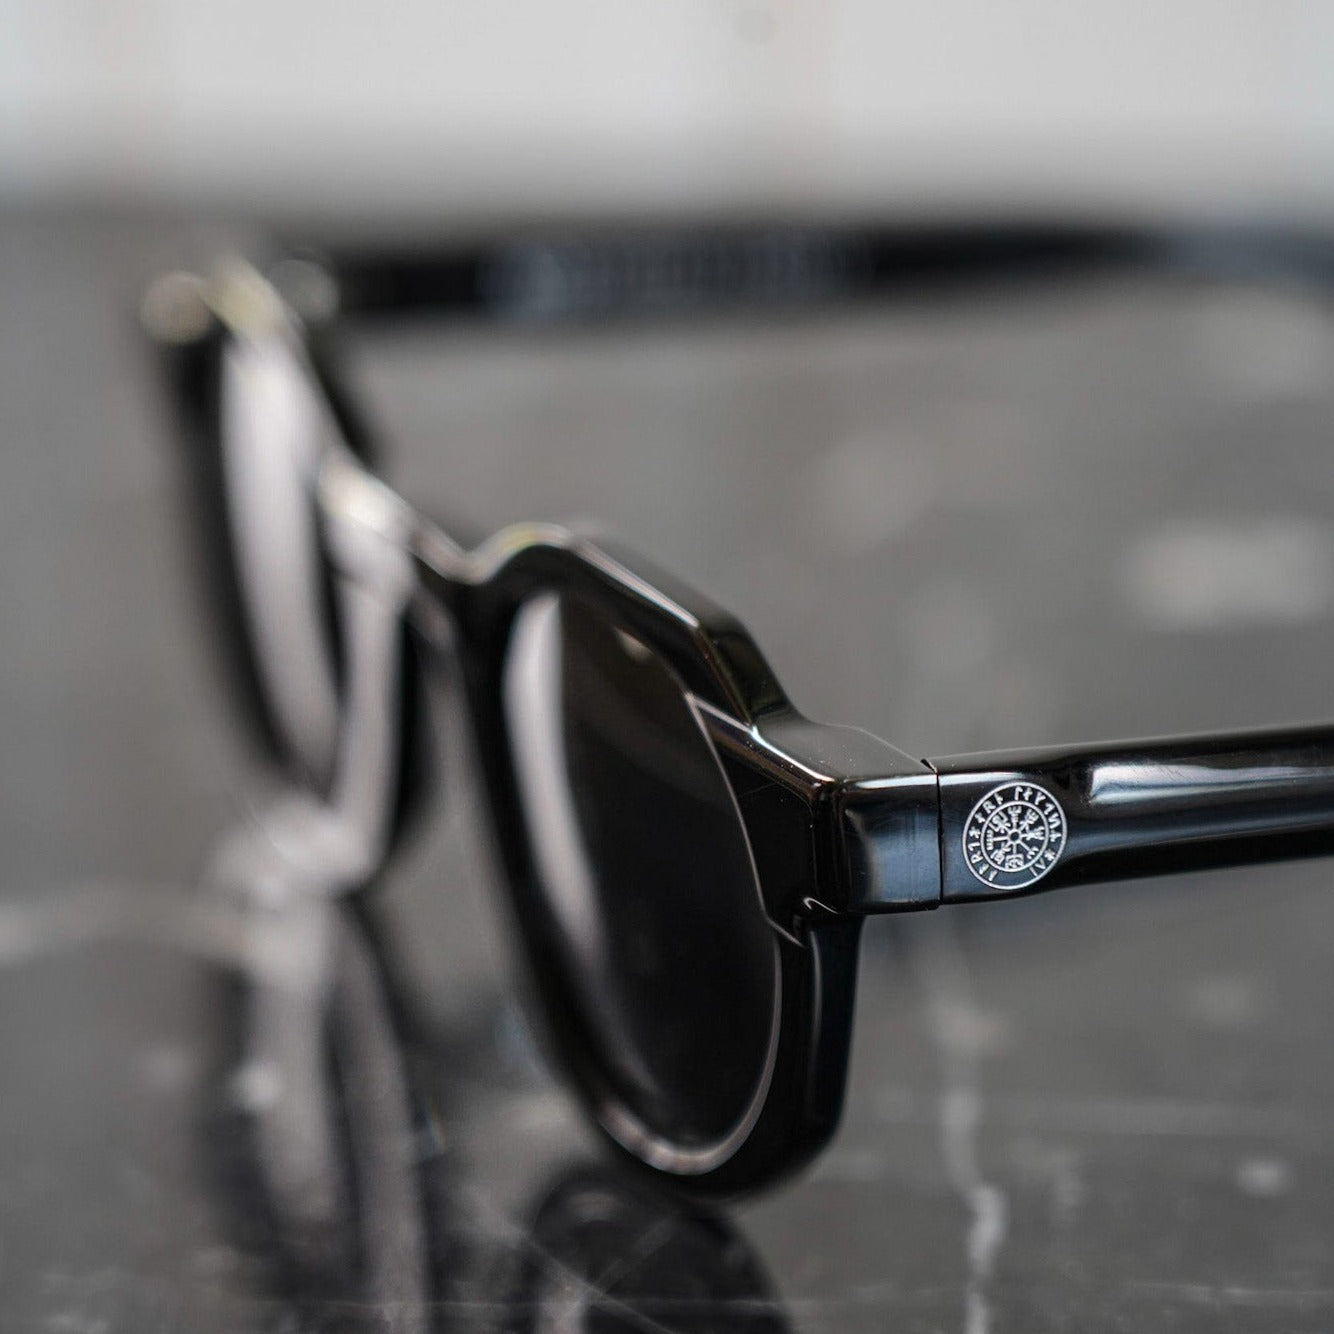 Signature sunglasses - Deep Black